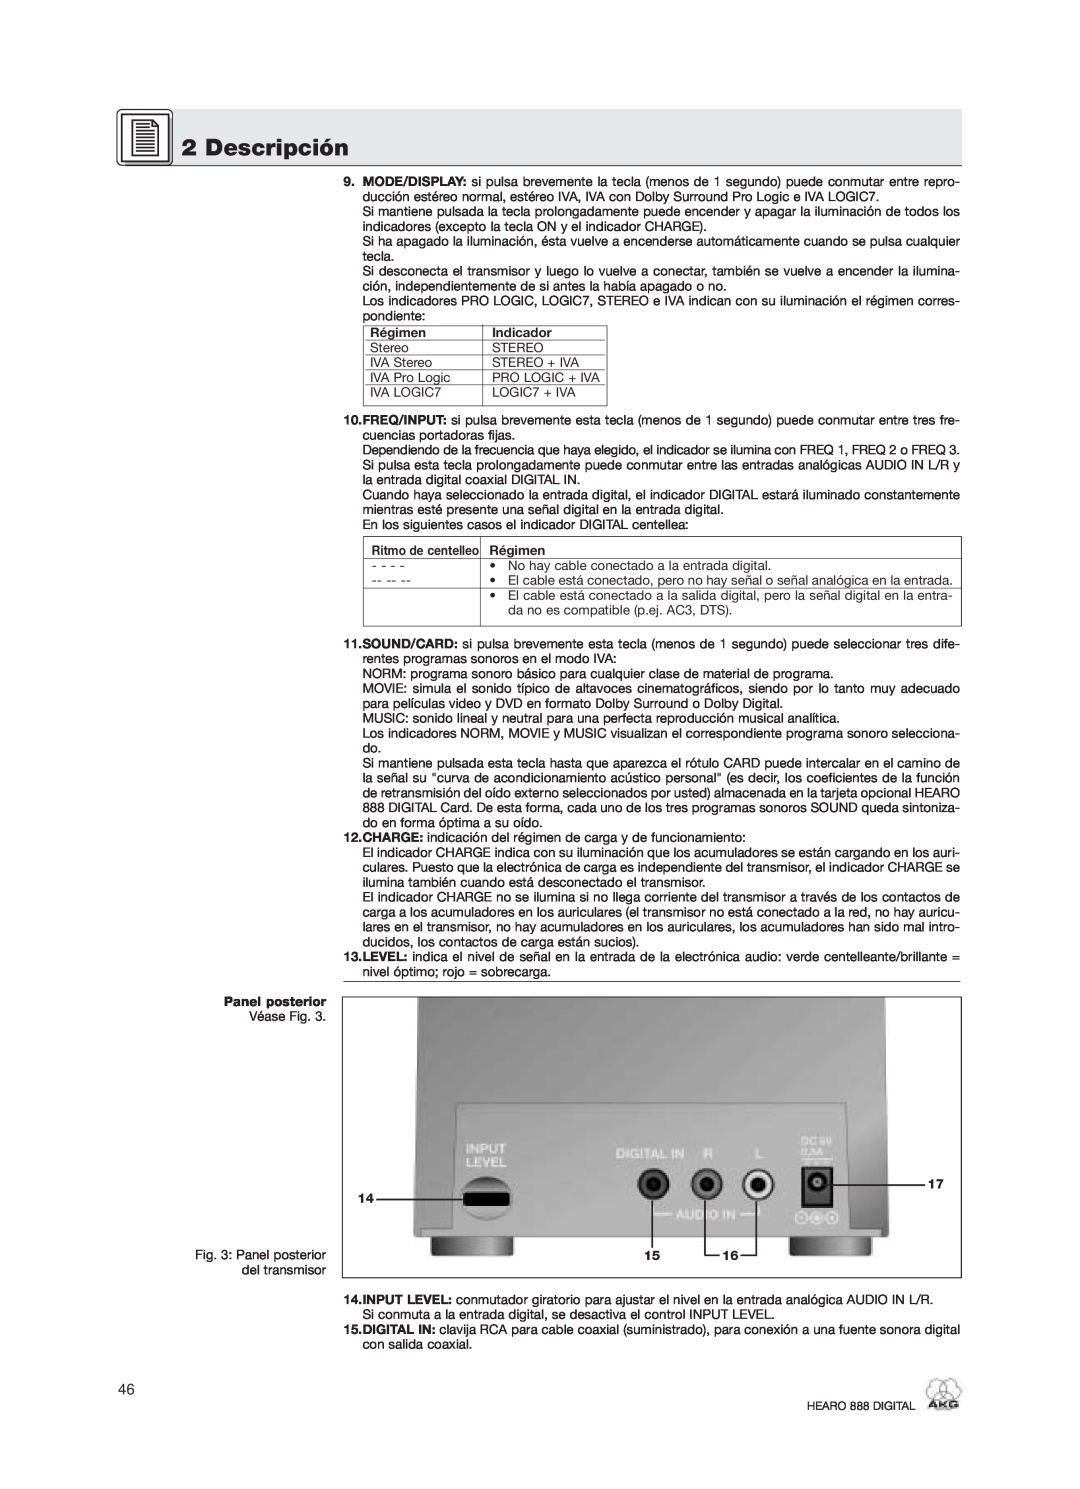 AKG Acoustics HEARO 888 specifications Descripción, Régimen, Indicador, 17 14 15 